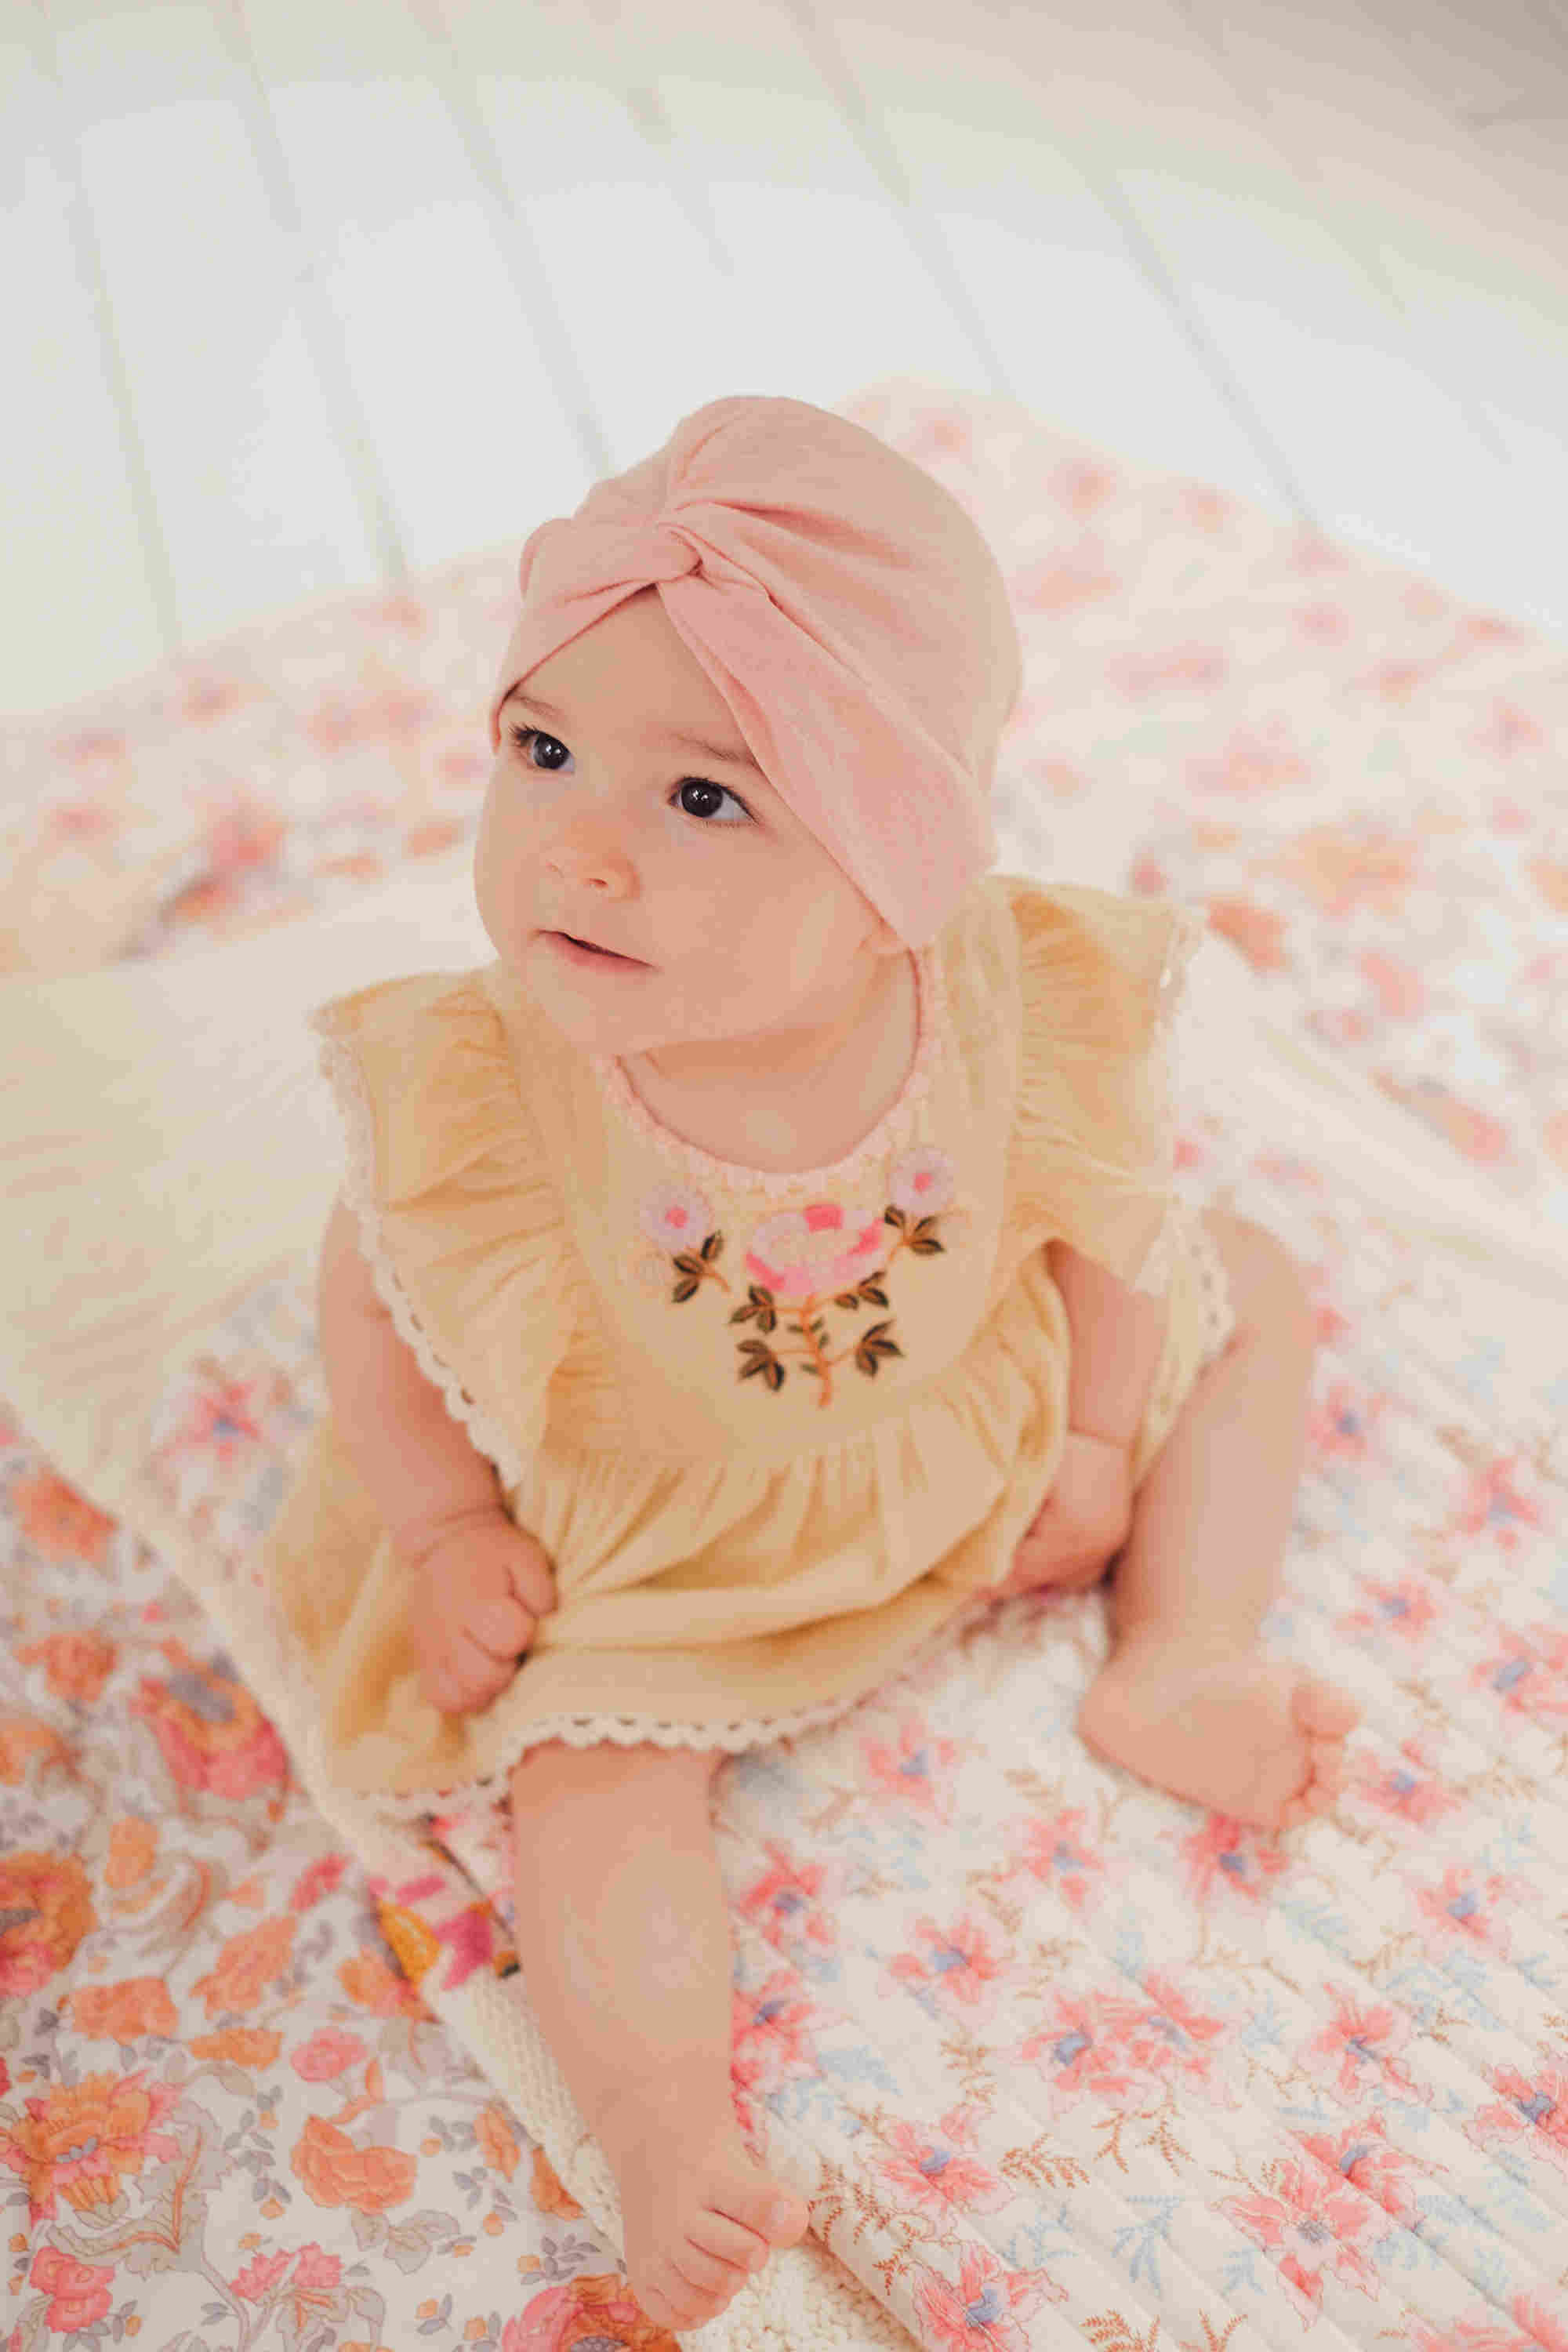 Baby Girls Yellow Embroidery Babysuit